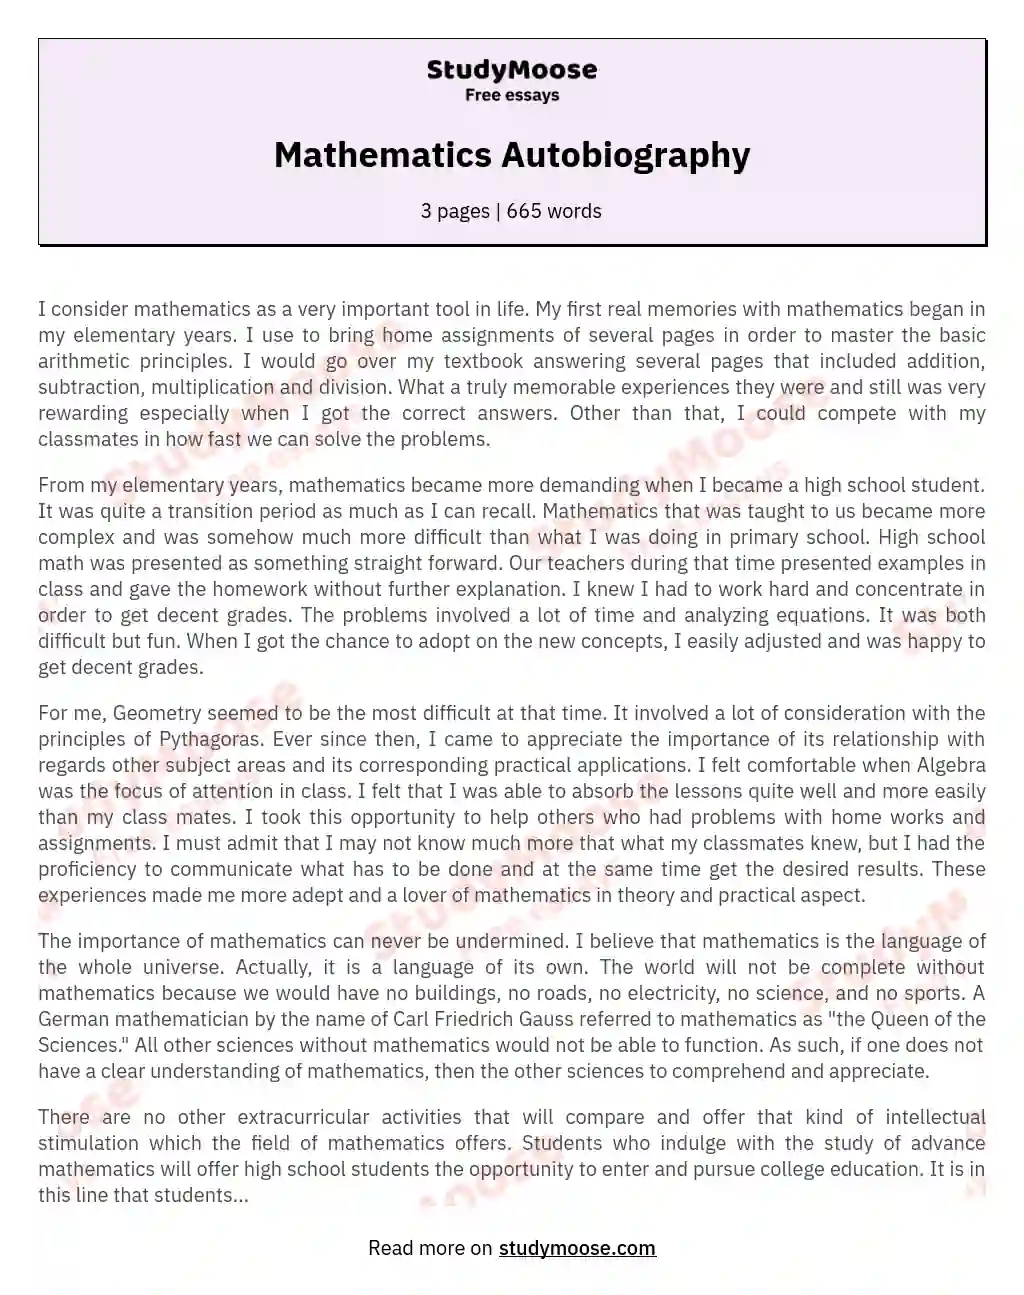 Mathematics Autobiography essay